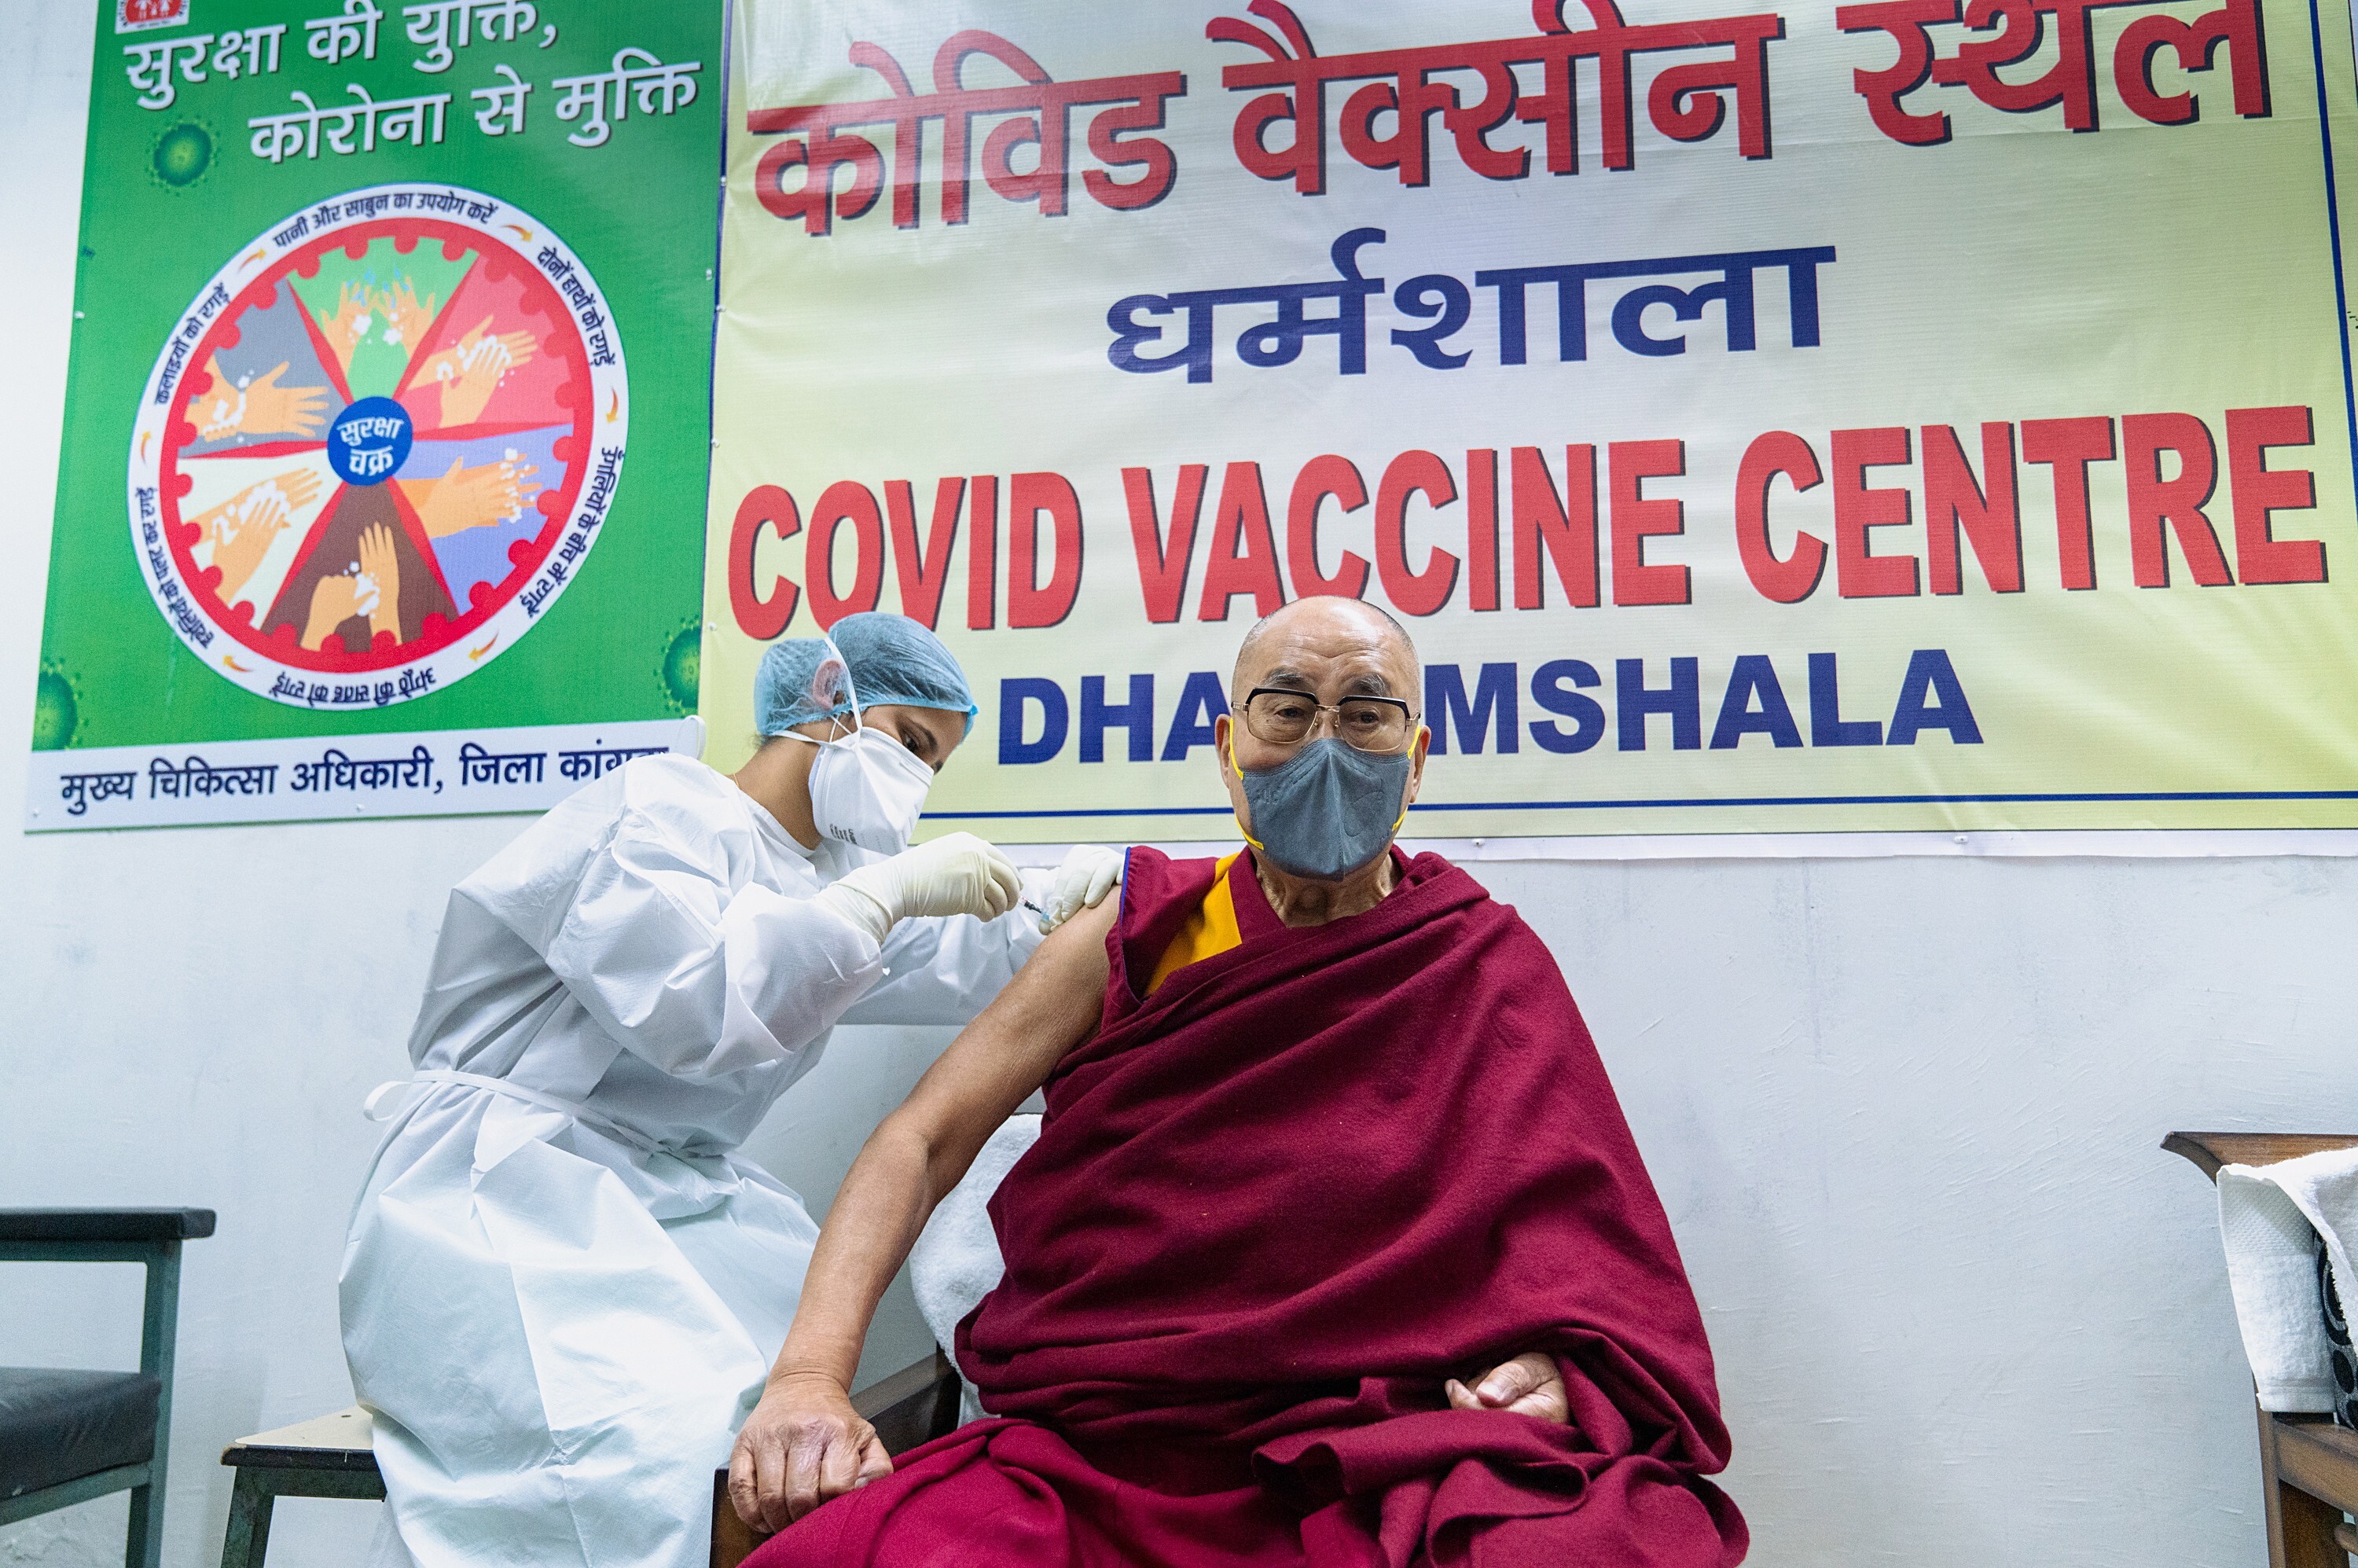 The Dalai Lama receiving his first Covid-19 vaccination in Dharamsala, India, on Saturday. Photo: EPA-EFE